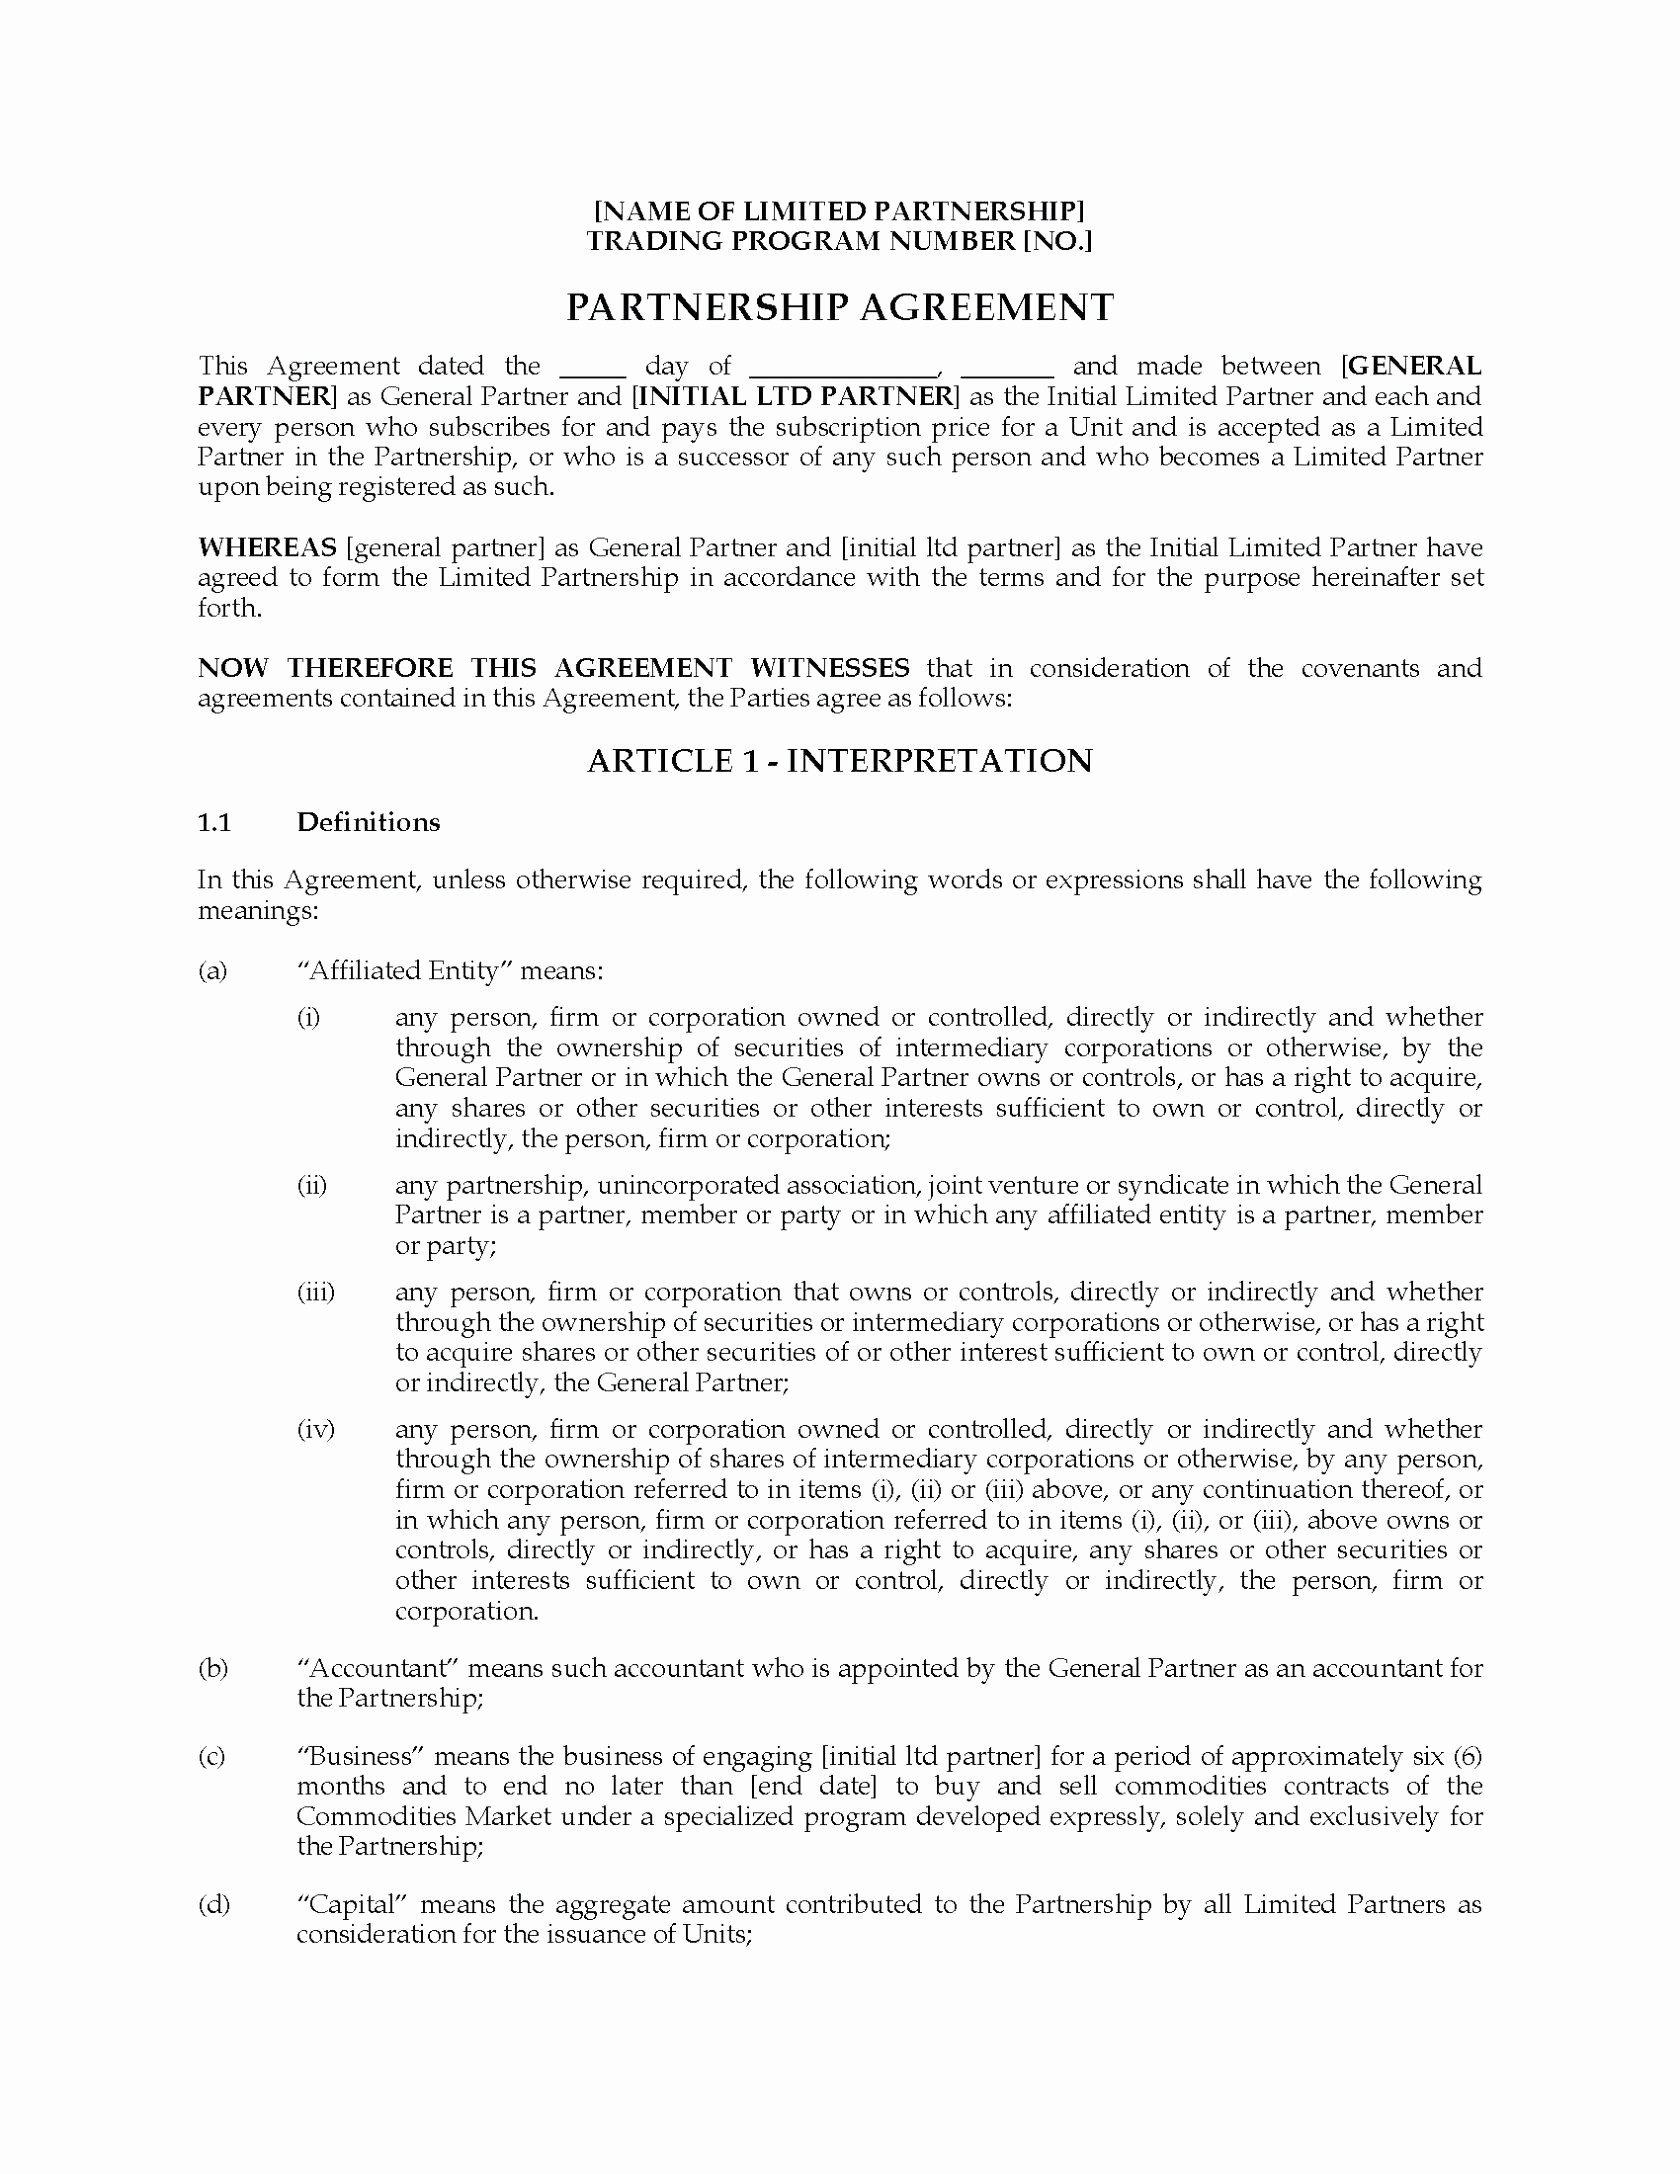 Memorandum Of Understanding Document Template New Agreement Sample Business